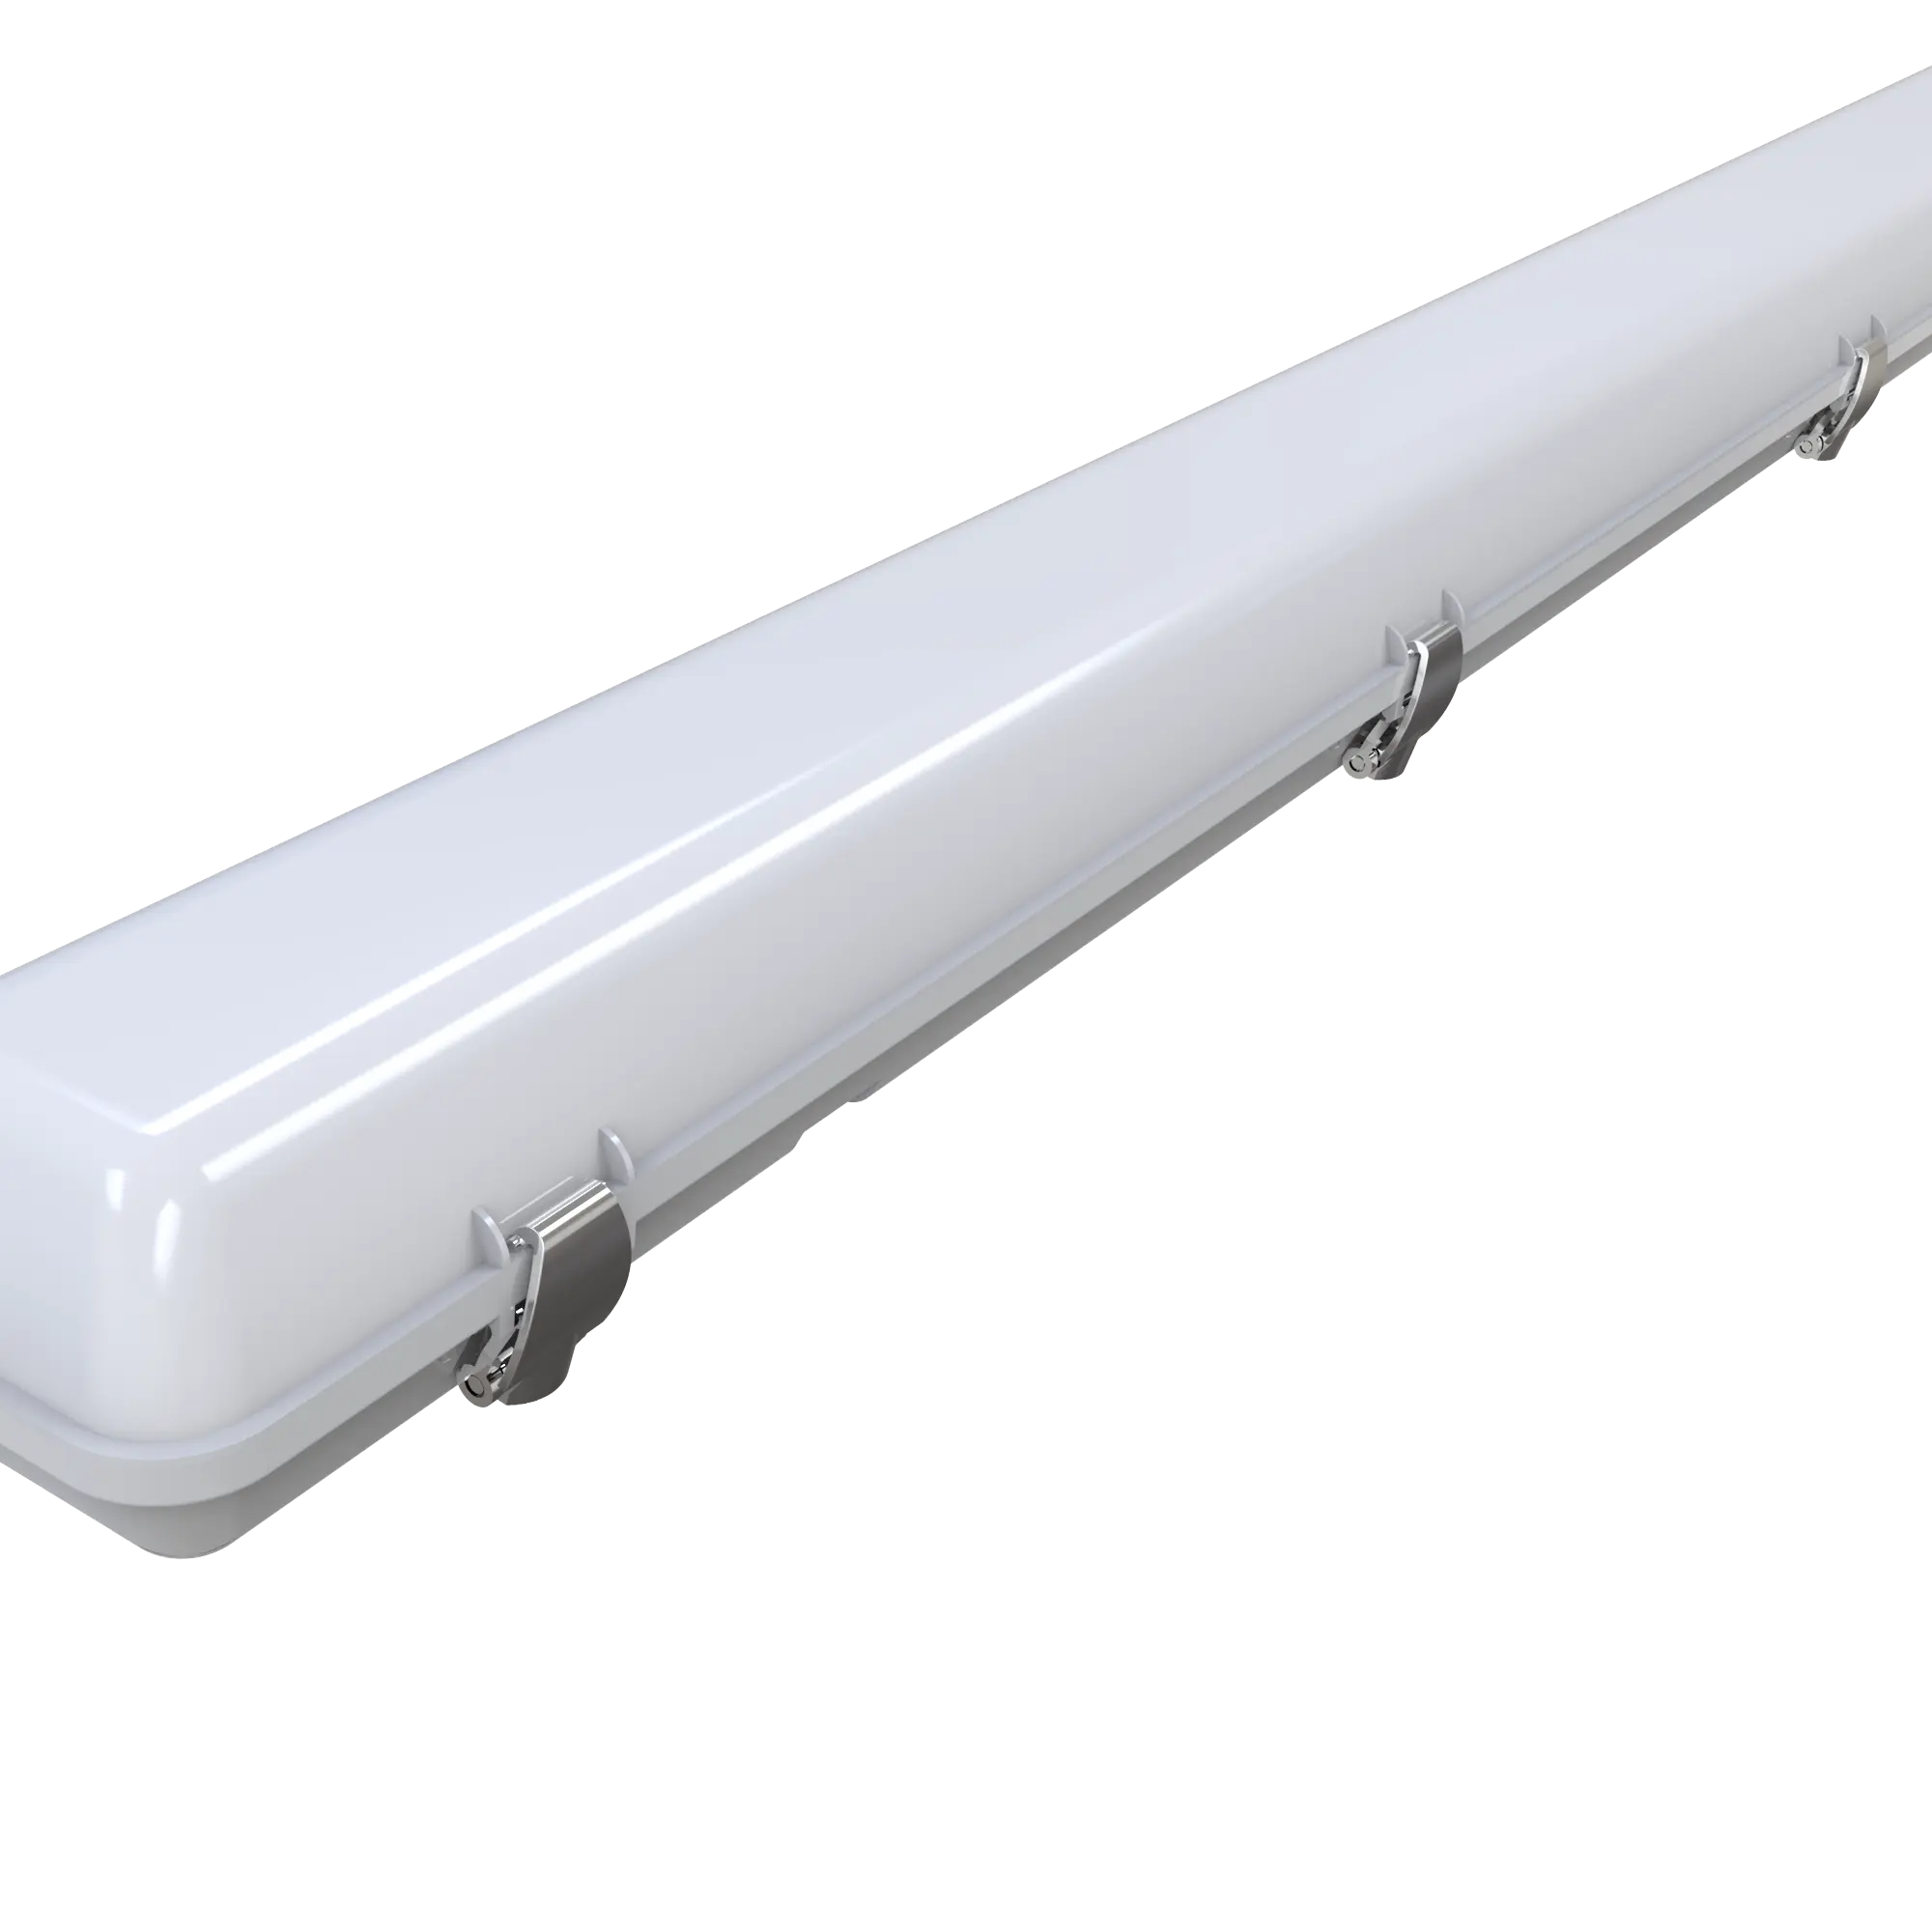 ShineLong Hot Vapor Tight Explosion Proof light Cleanroom Ip65 Linear 4Ft 40w Led Lighting Fixture DLC